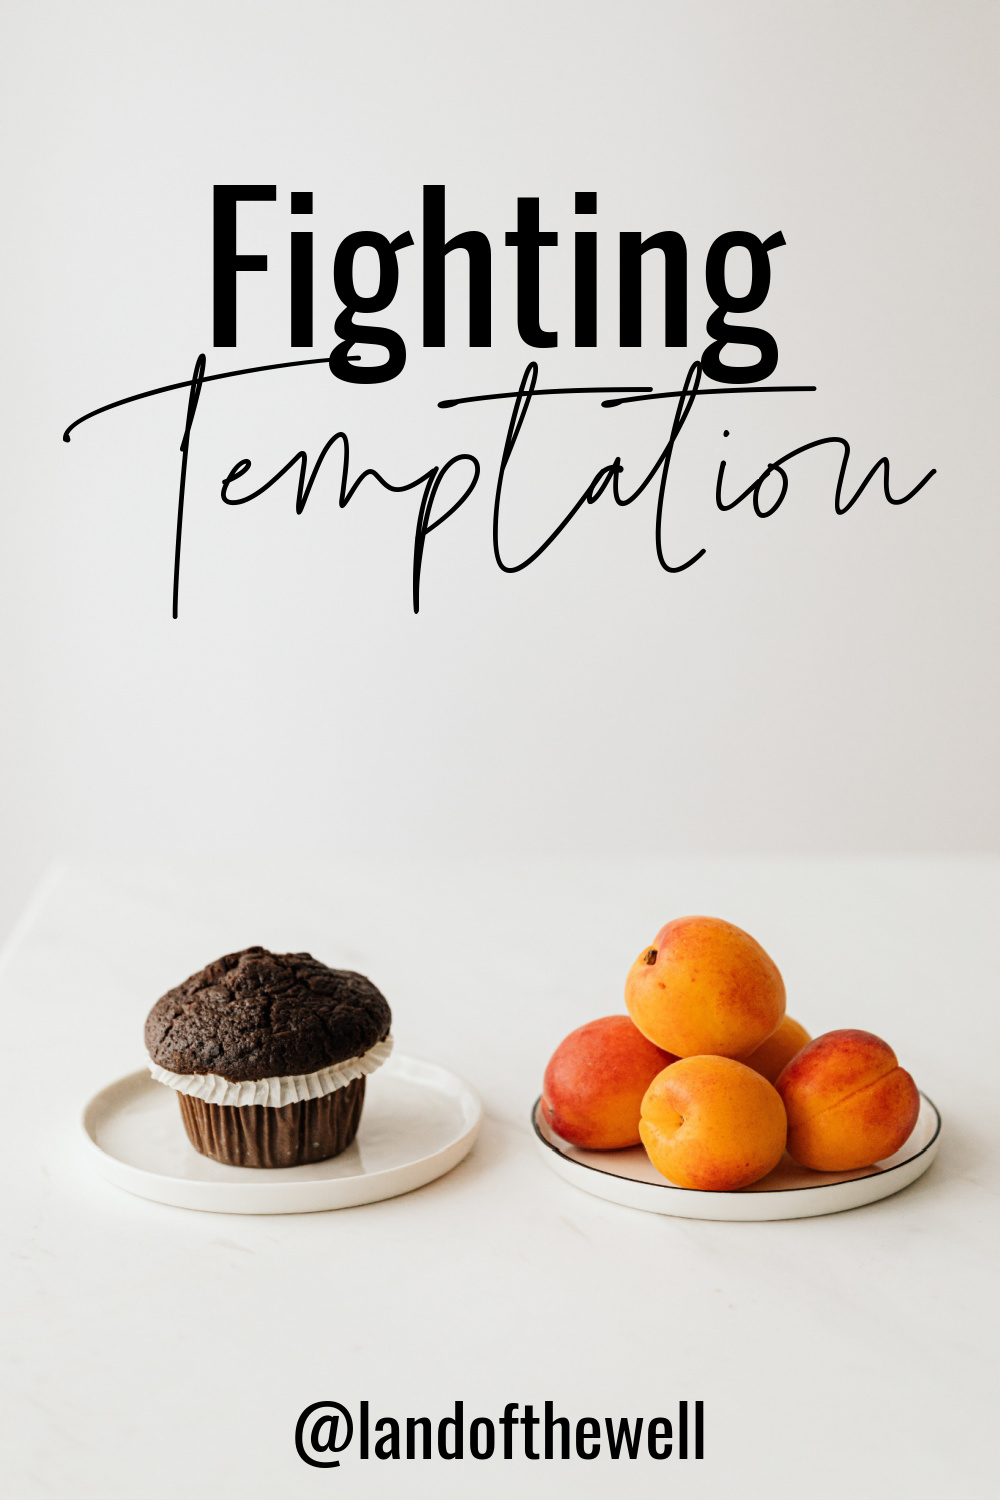 Fighting Temptation